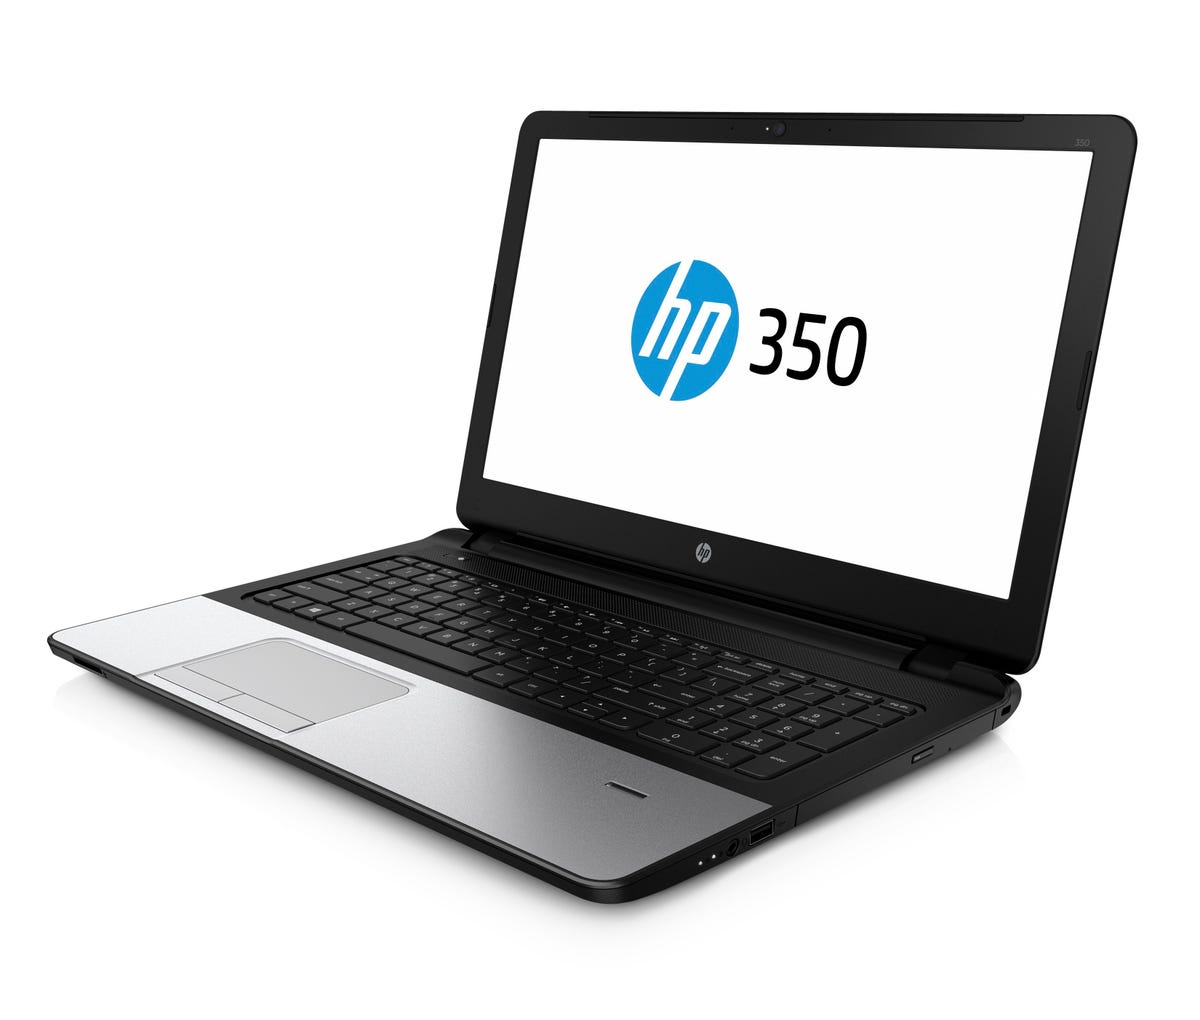 HP_350_G1_Notebook_PC_leftsmall.jpg